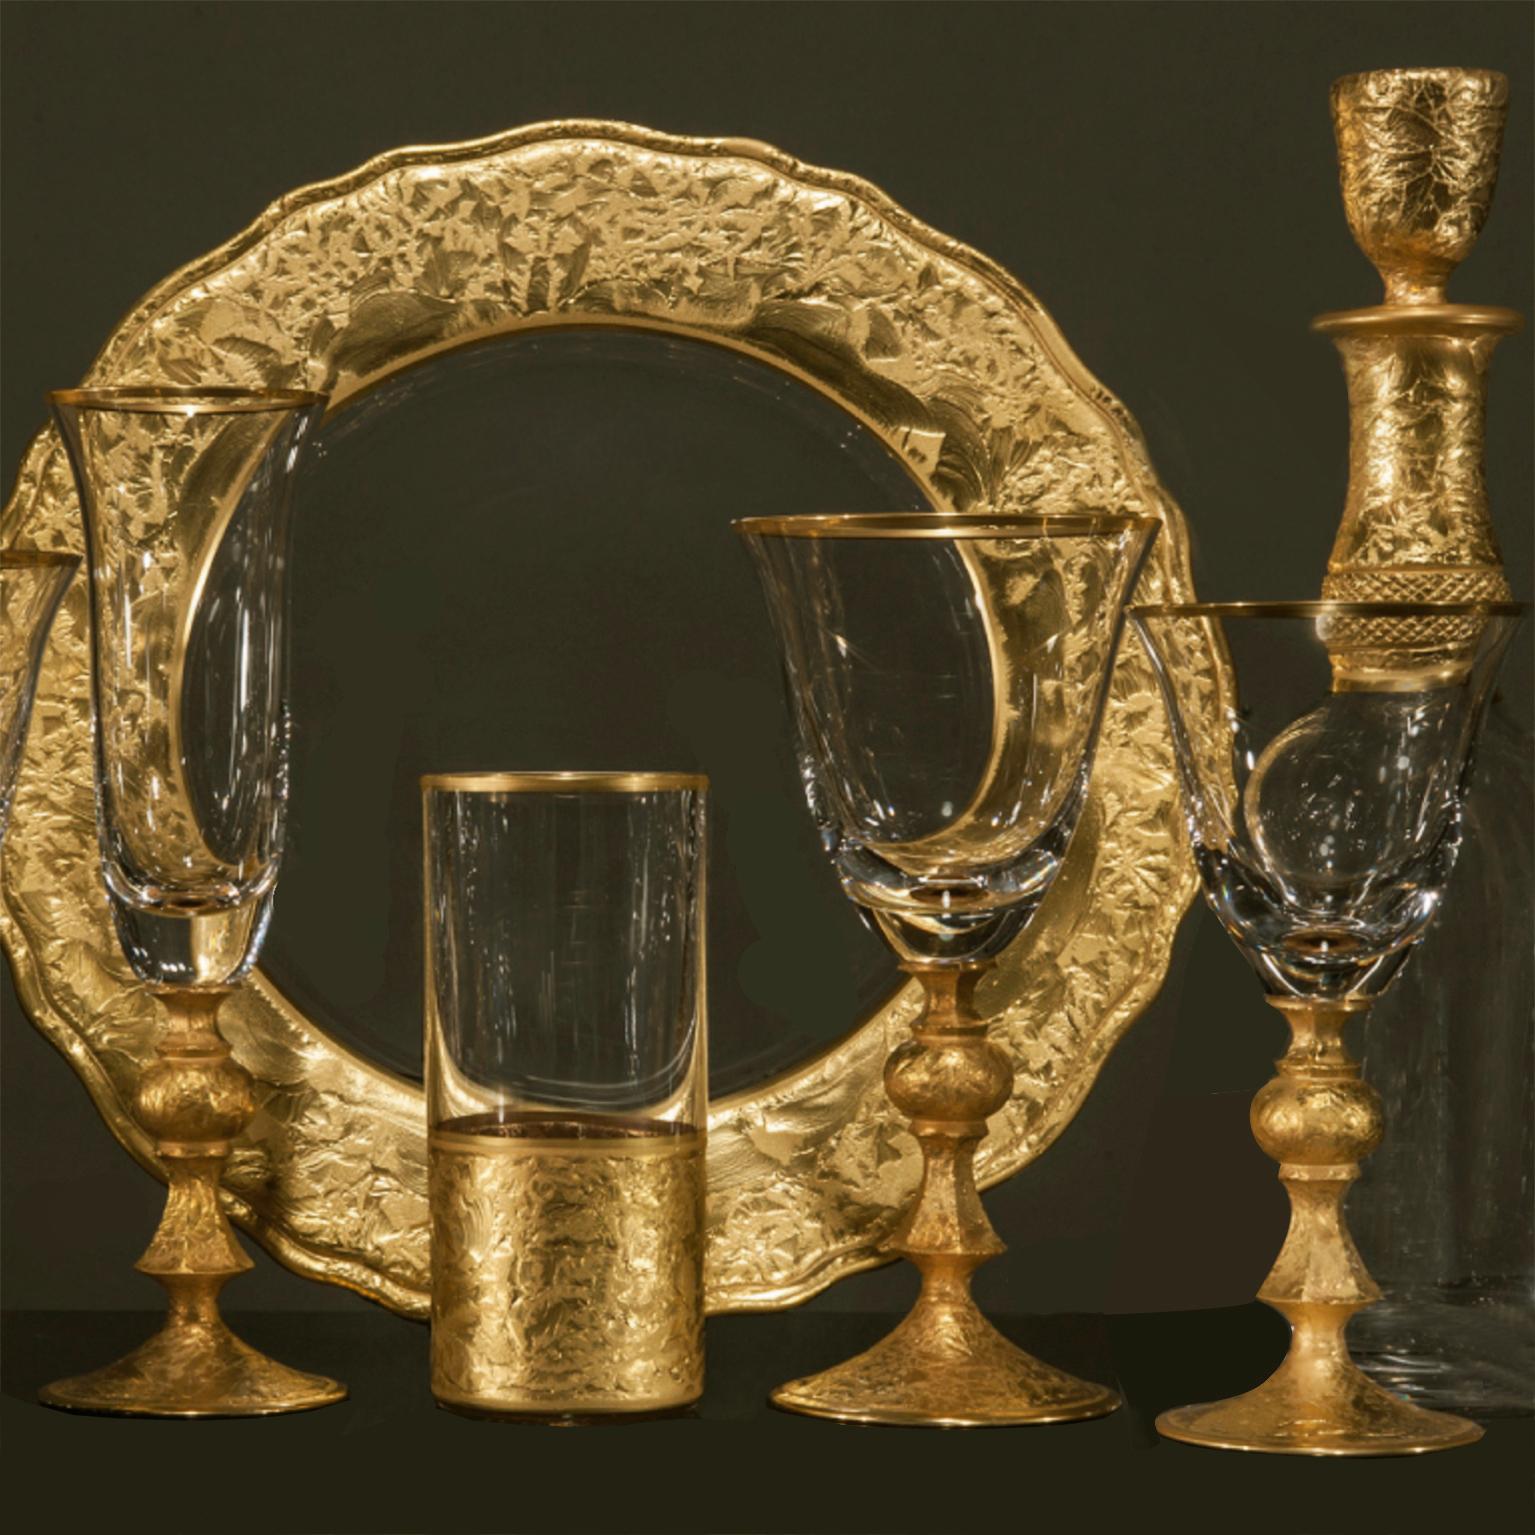 Italian Set of 2 Gold Engraved Large Presentation Plates For Sale